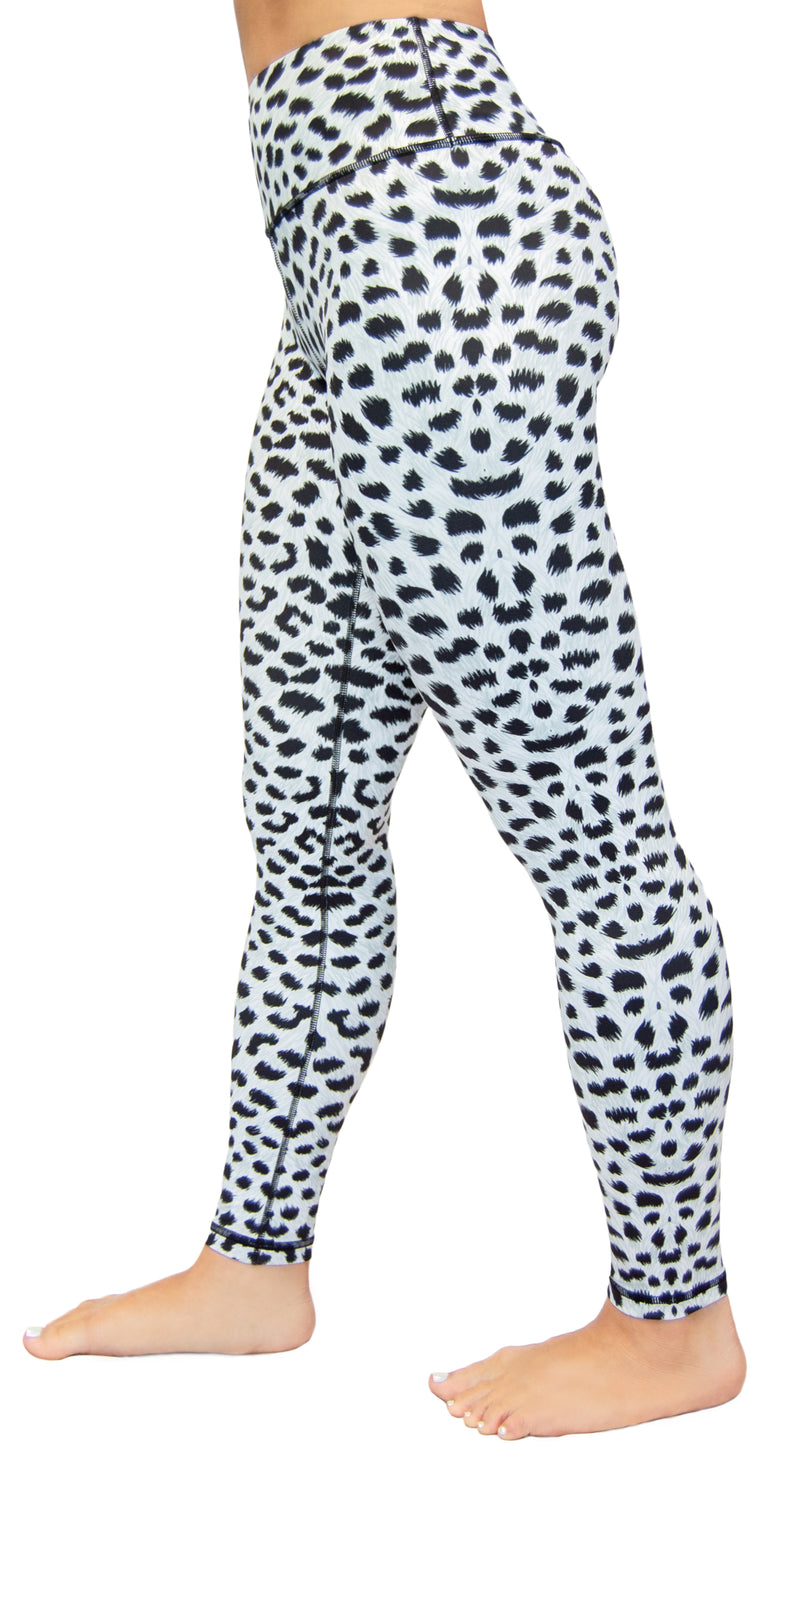 Snow Leopard Pattern Women's Yoga Pants Leggings High Waisted